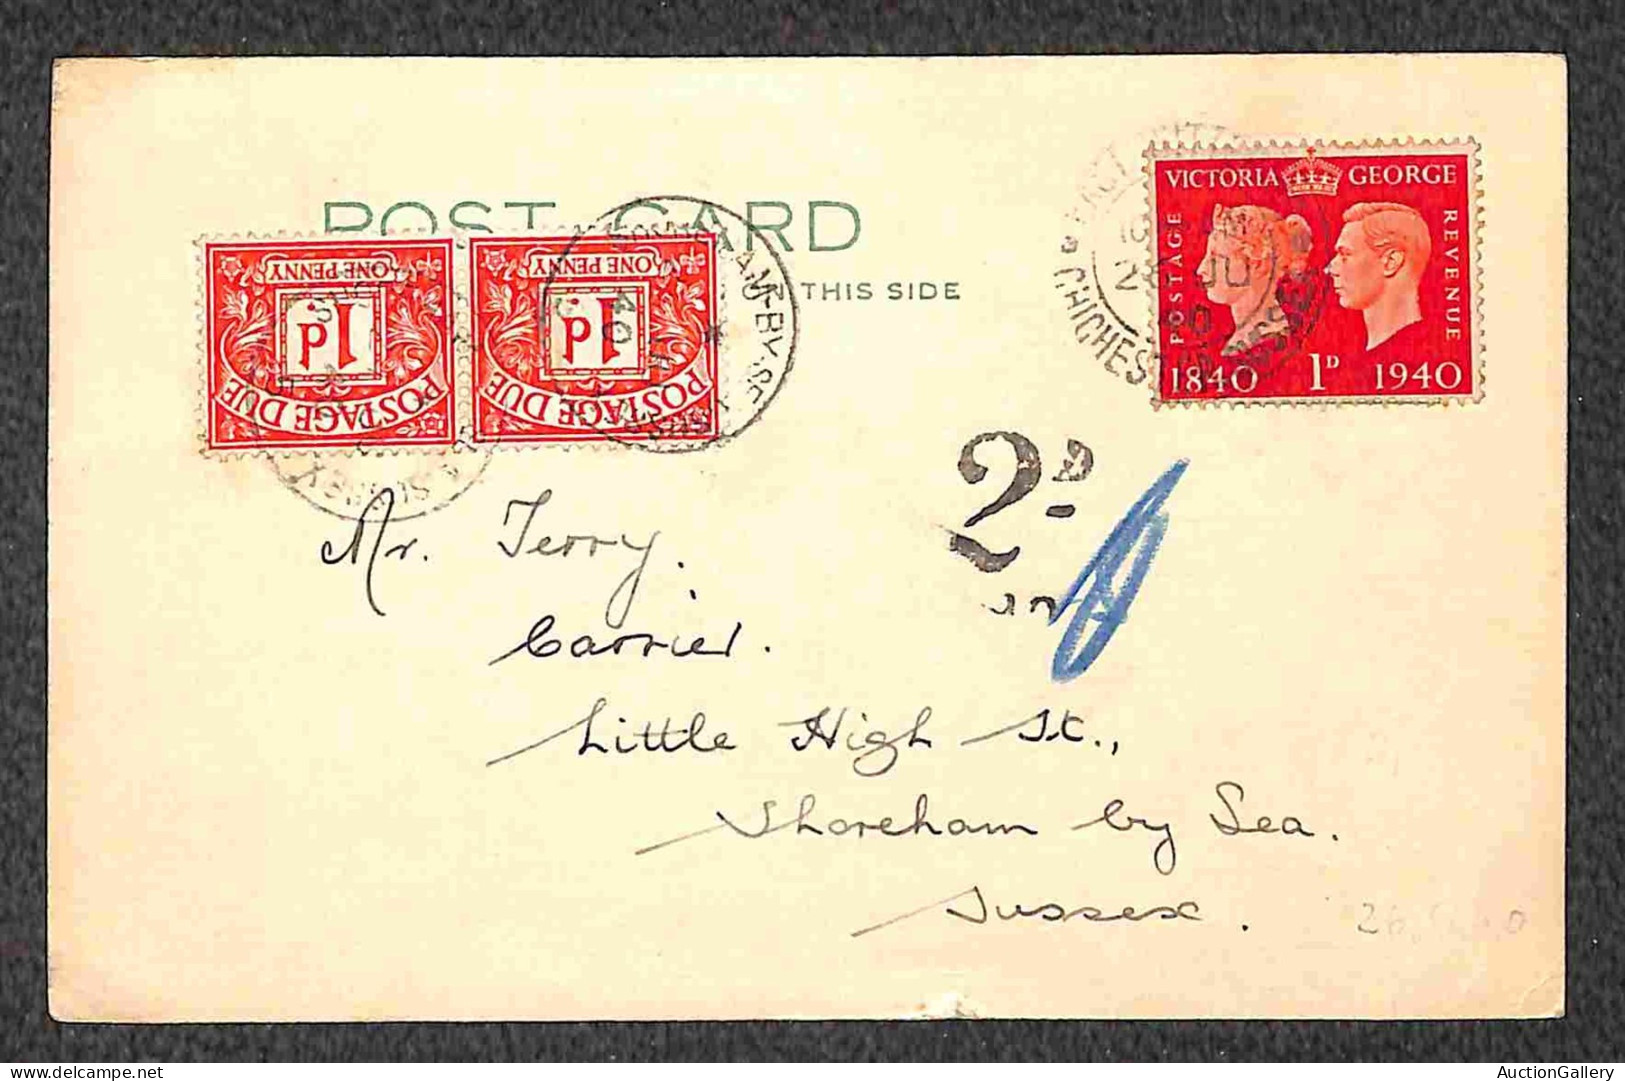 Europa - Gran Bretagna - 1934/1966 - Tre buste e una cartolina tassate in arrivo